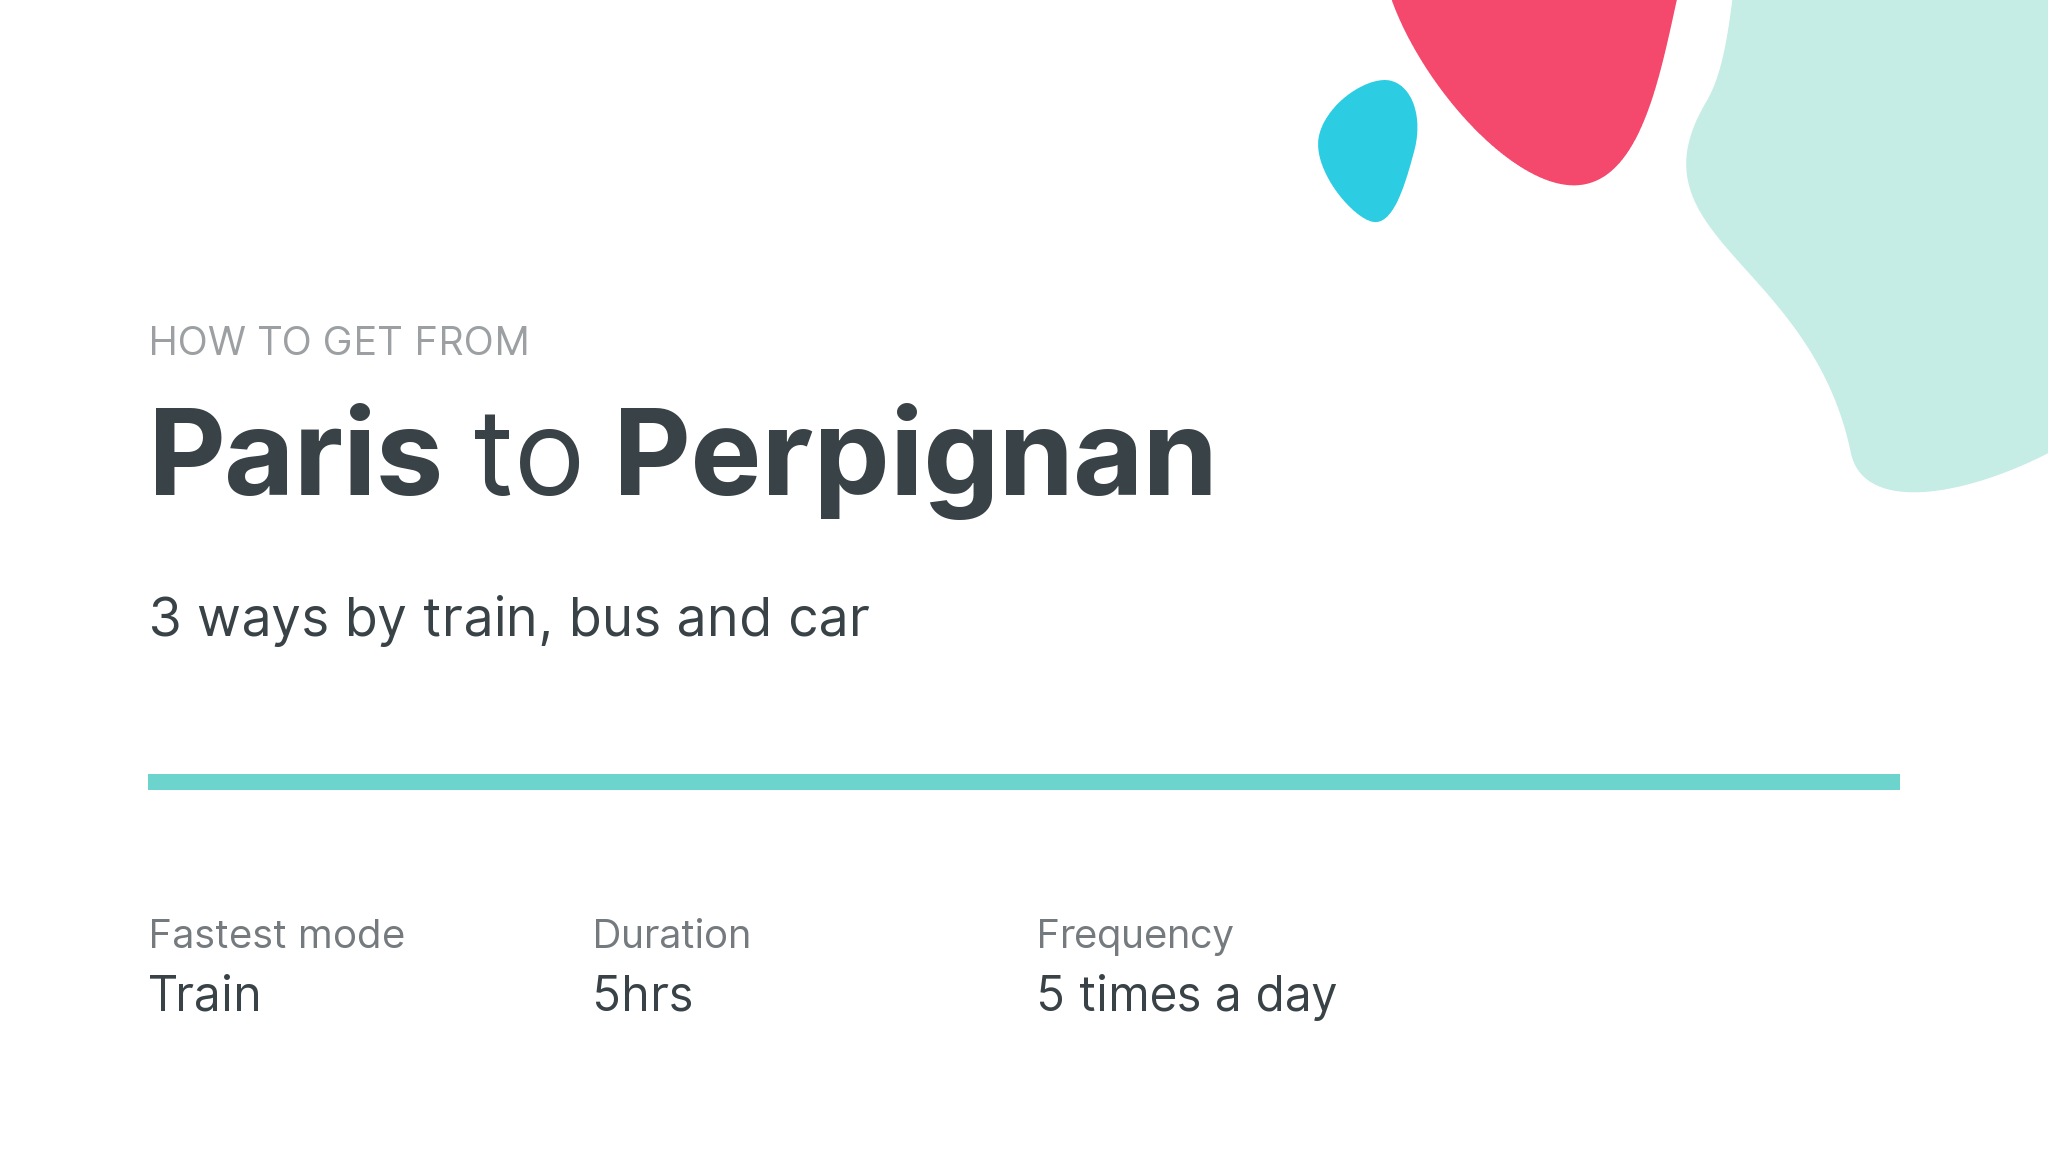 How do I get from Paris to Perpignan